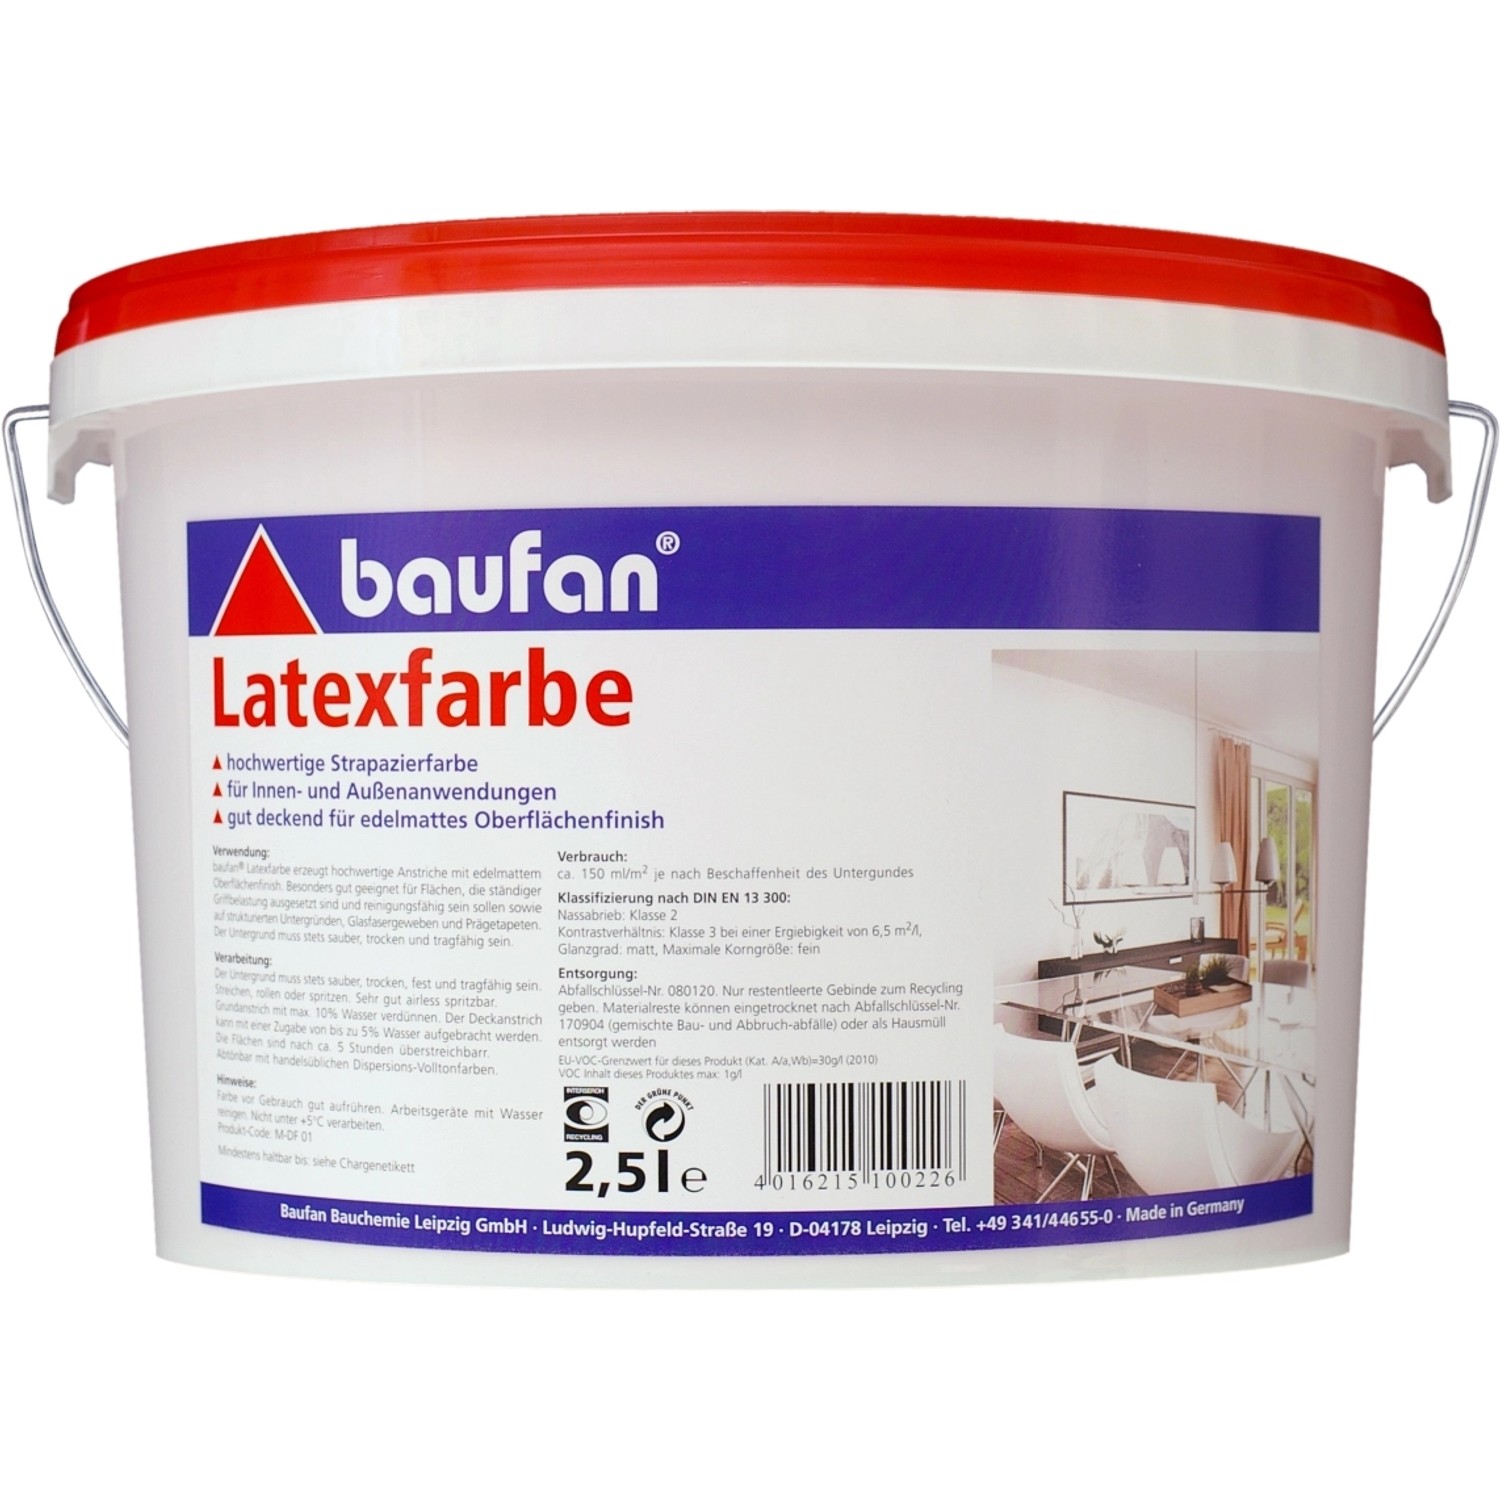 Baufan Latexfarbe 2,5 l von Baufan